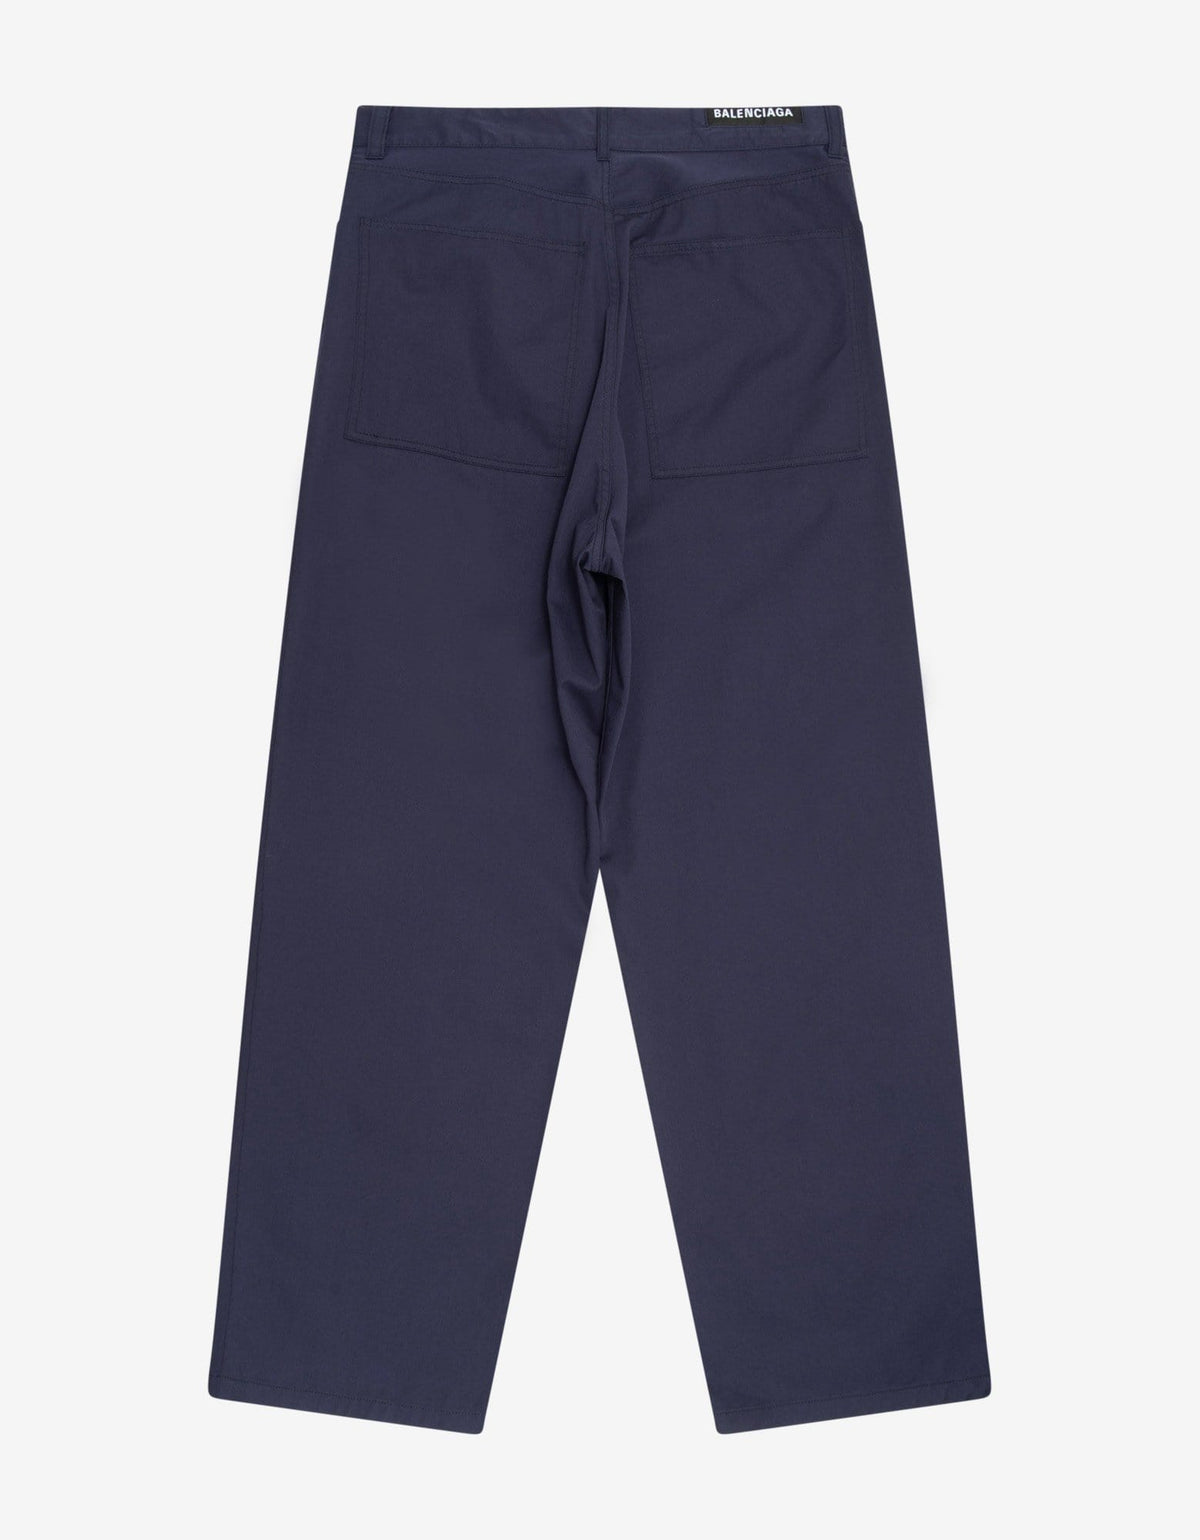 Balenciaga Navy Blue Baggy Chino Trousers